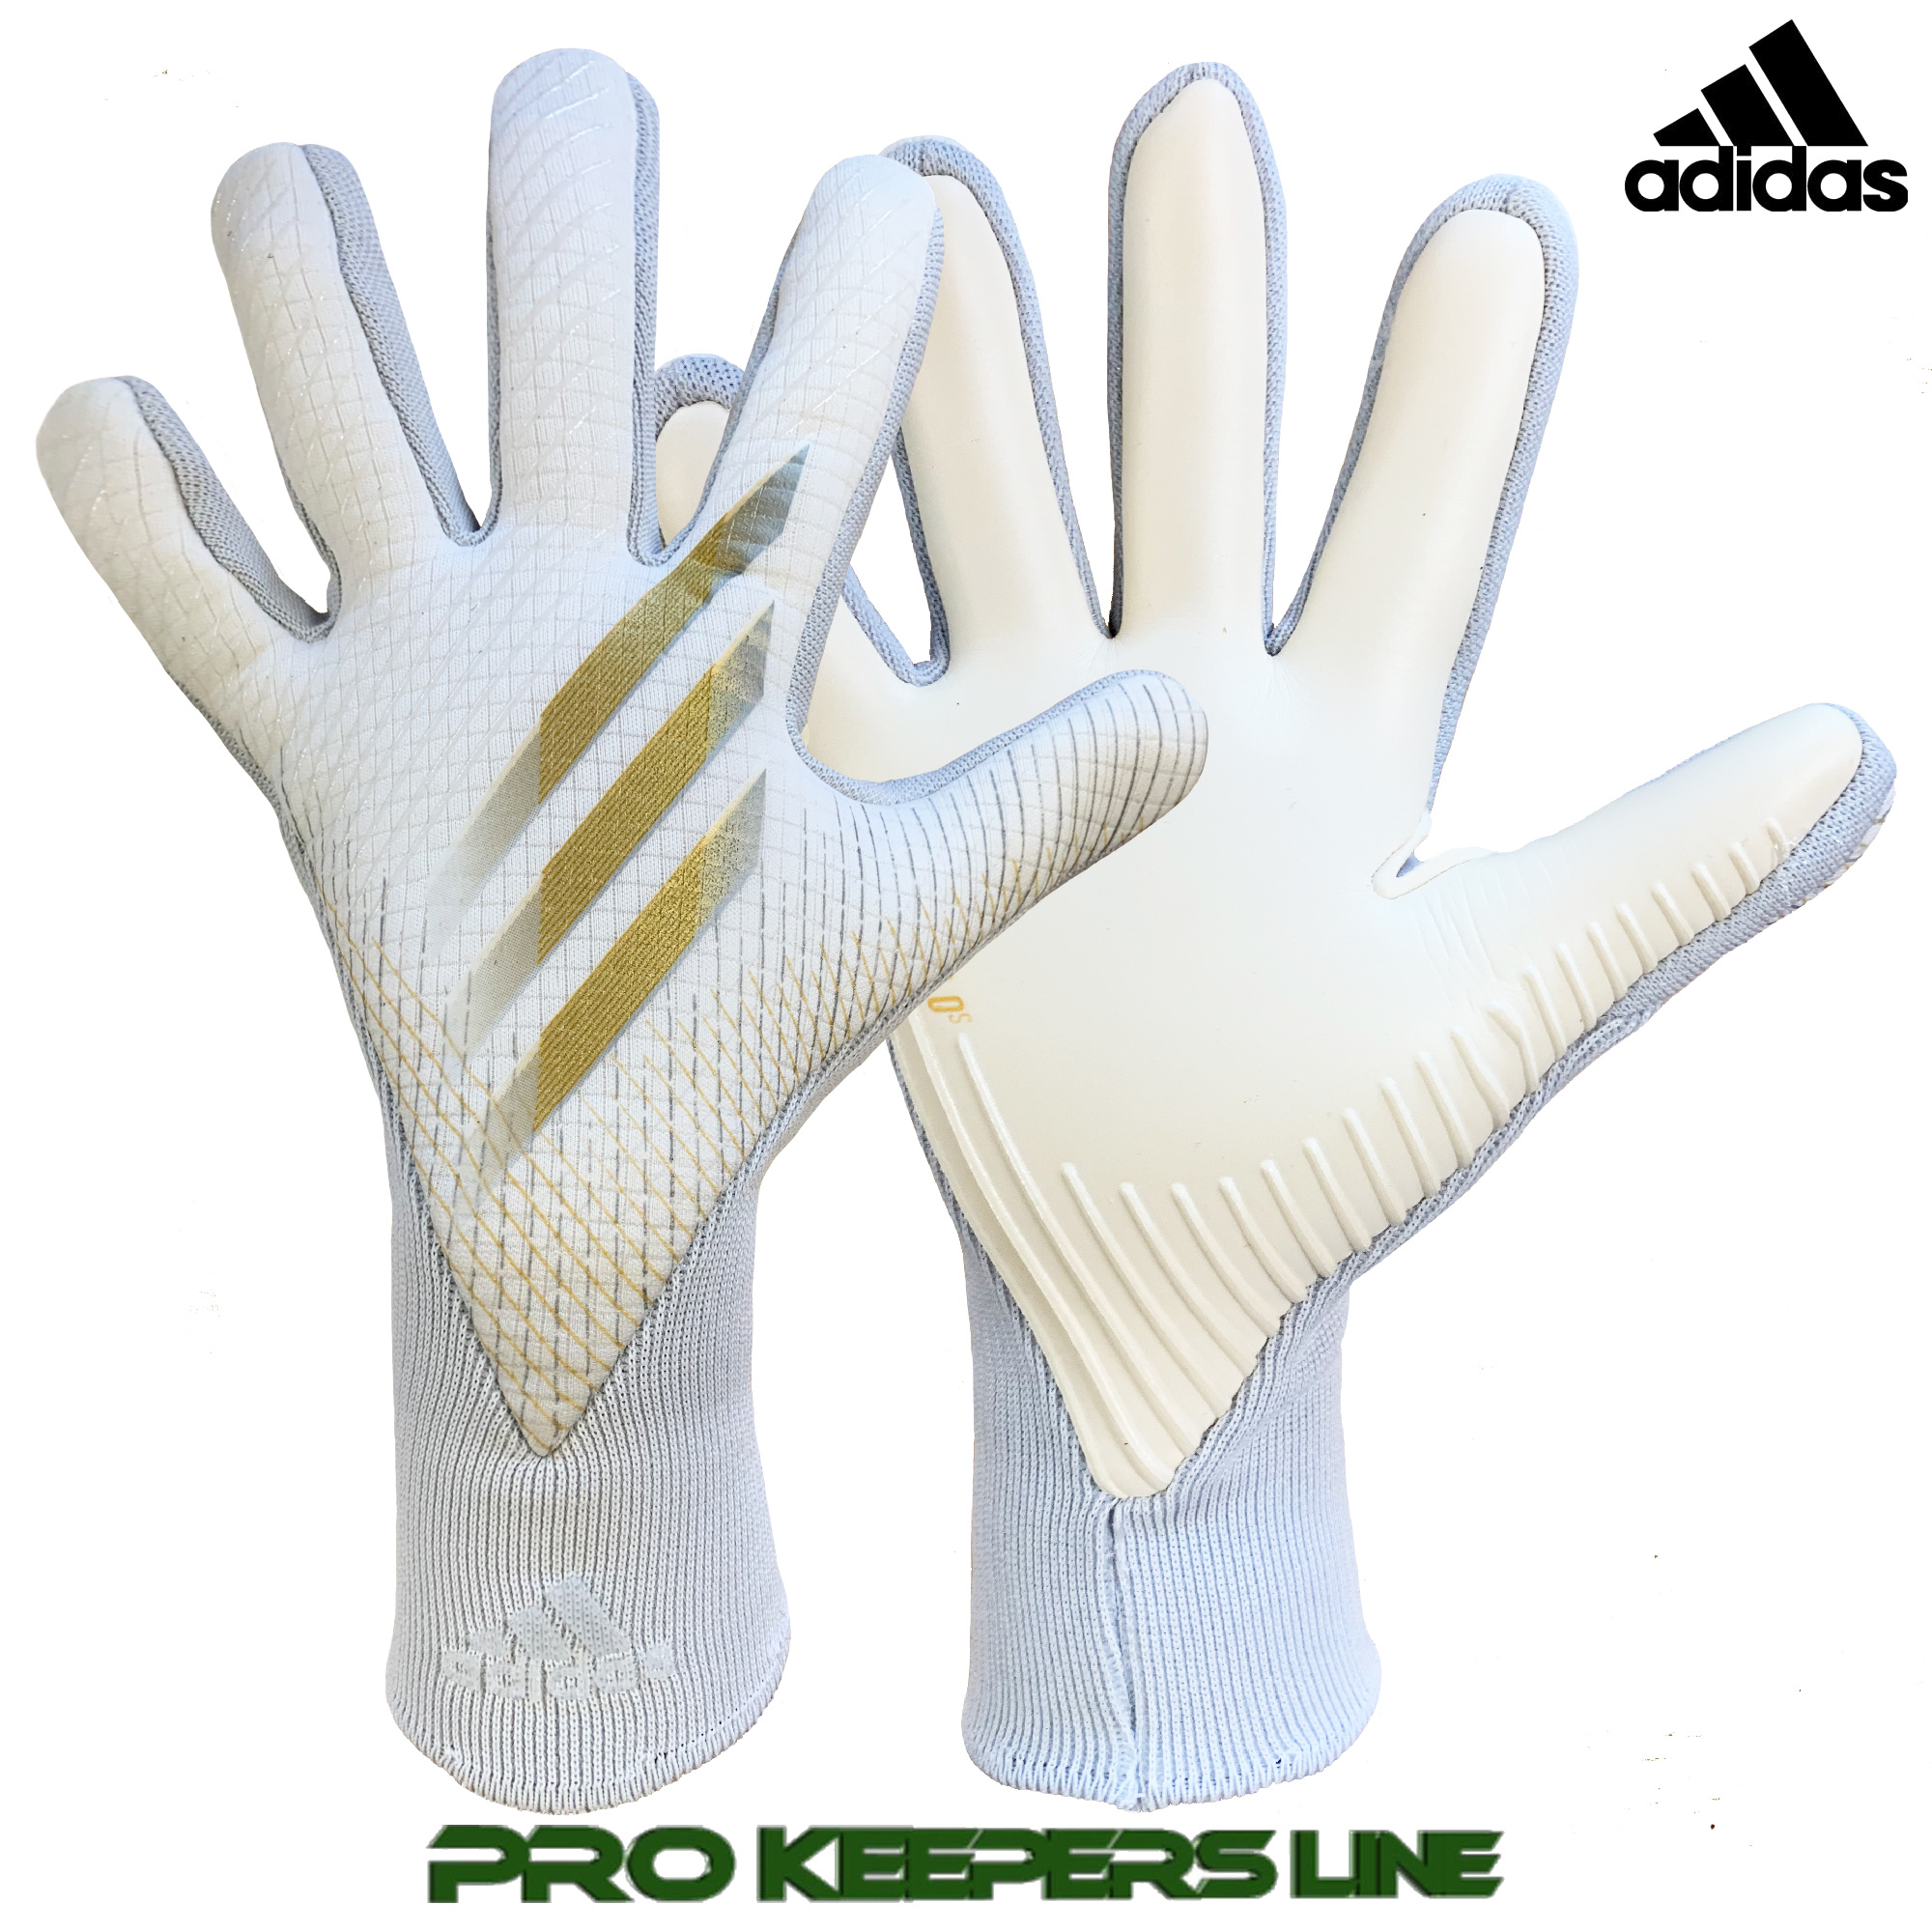 adidas x pro goalkeeper gloves